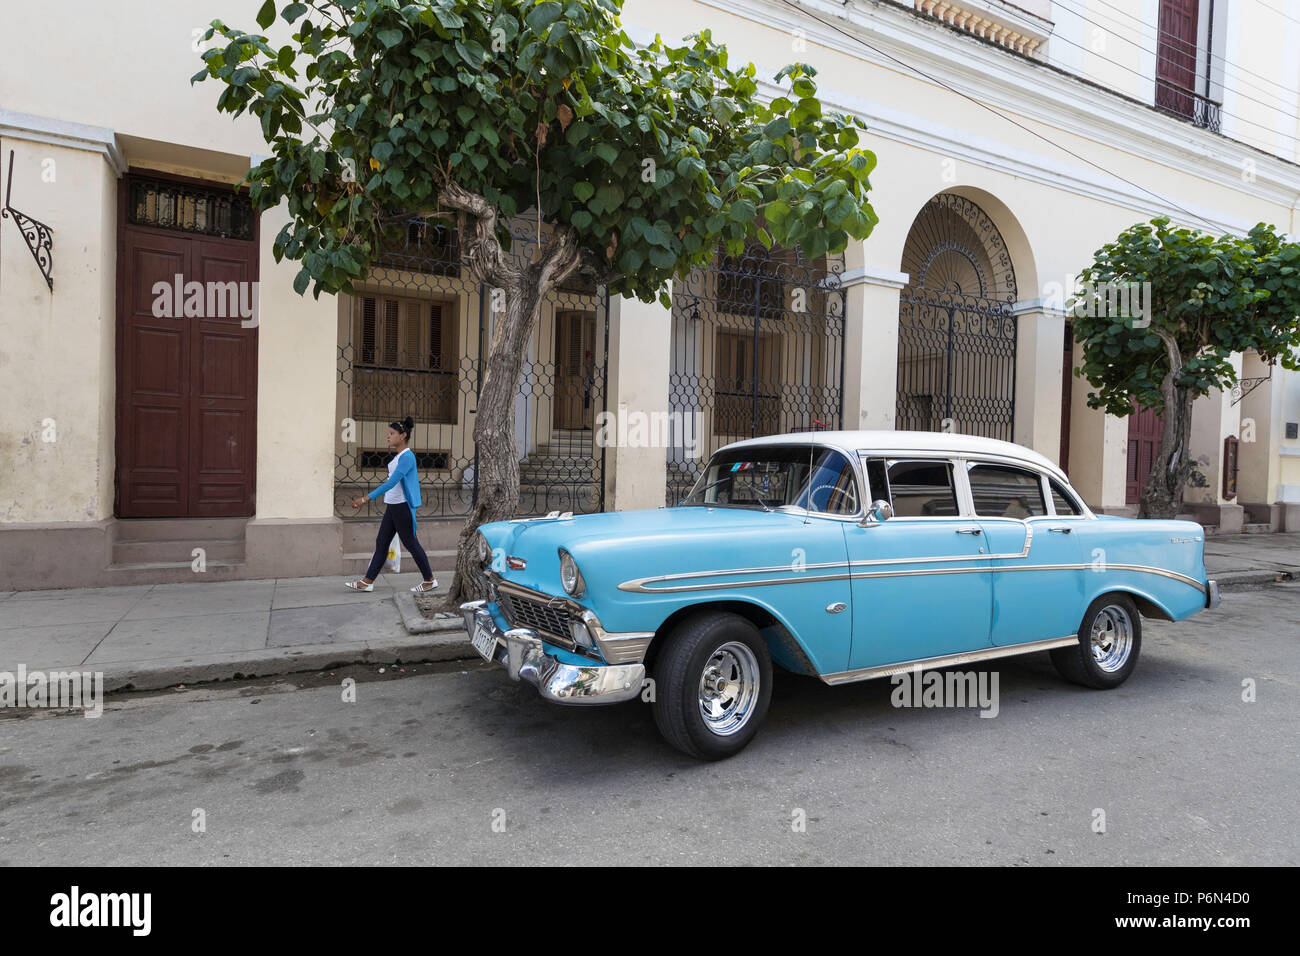 Classic 1956 Chevrolet Bel Air Taxi, connu localement sous le nom de 'almendrones' dans la ville de Cienfuegos, Cuba. Banque D'Images